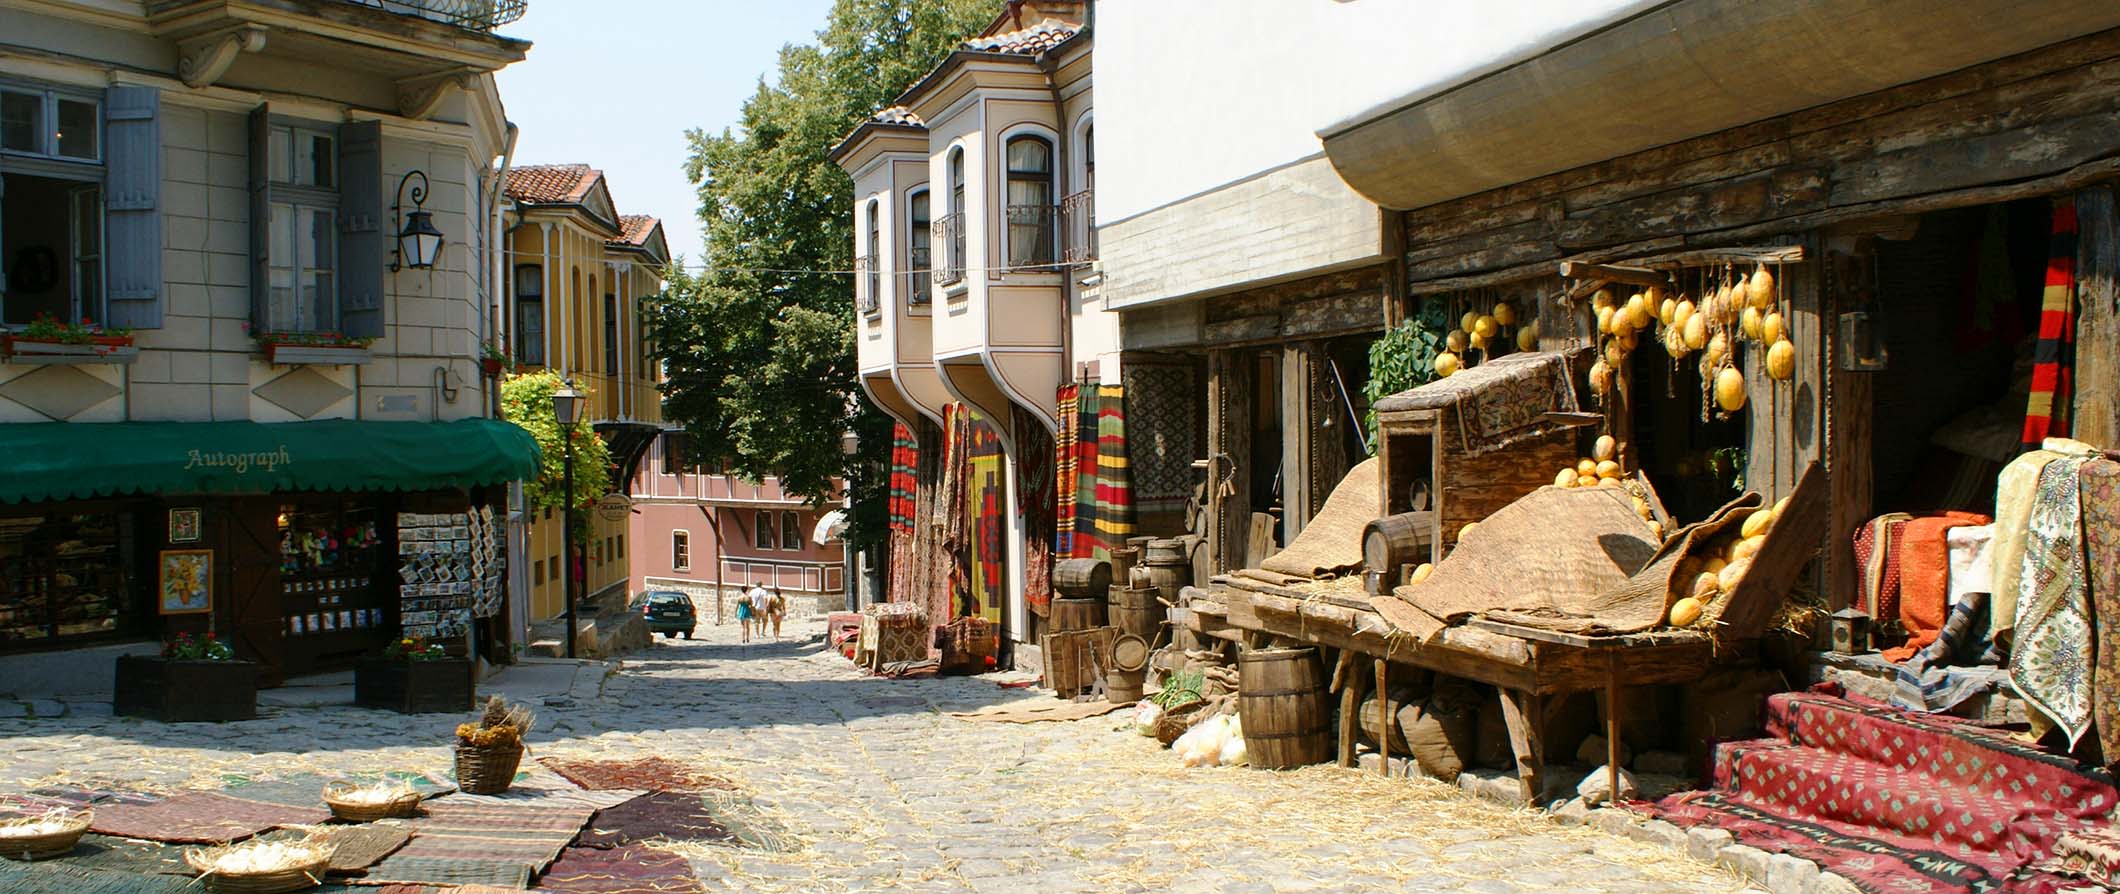 The charming, narrow streets of Plovdiv, Bulgaria